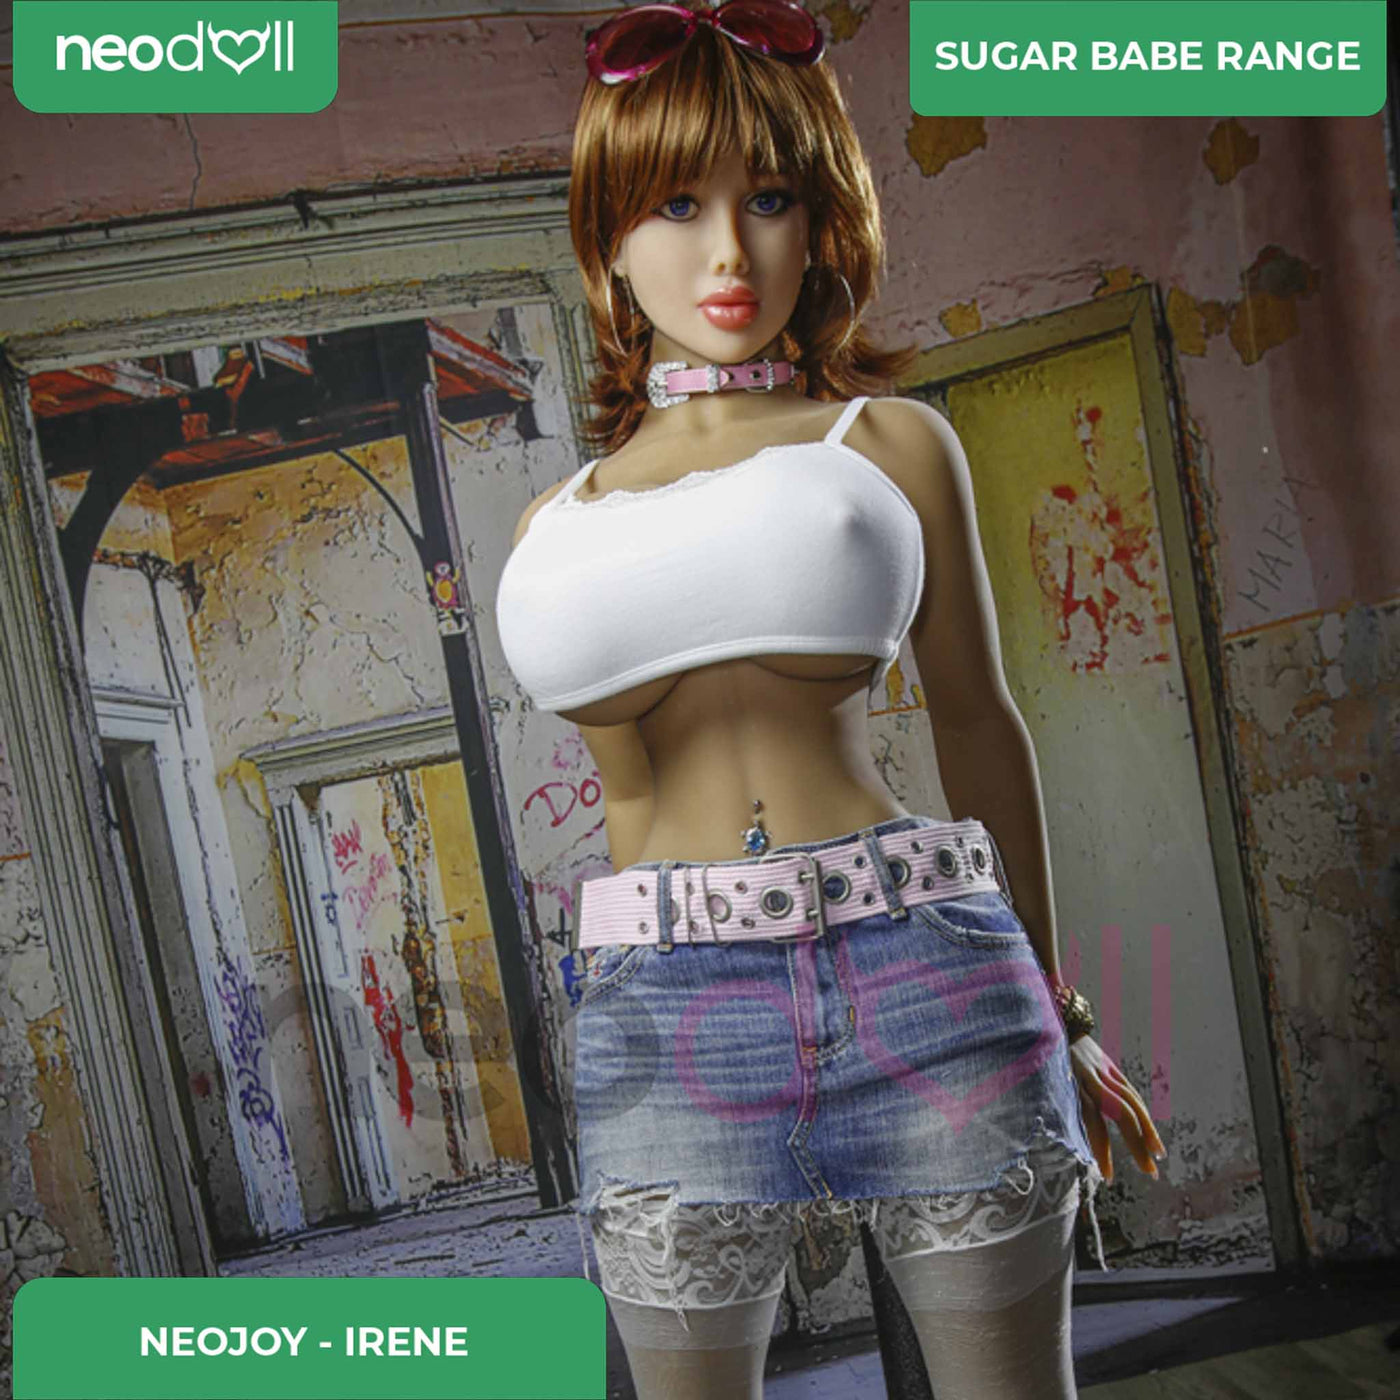 Neodoll Sugar Babe - Irene - Realistic Sex Doll - Uterus - 153cm - Tan